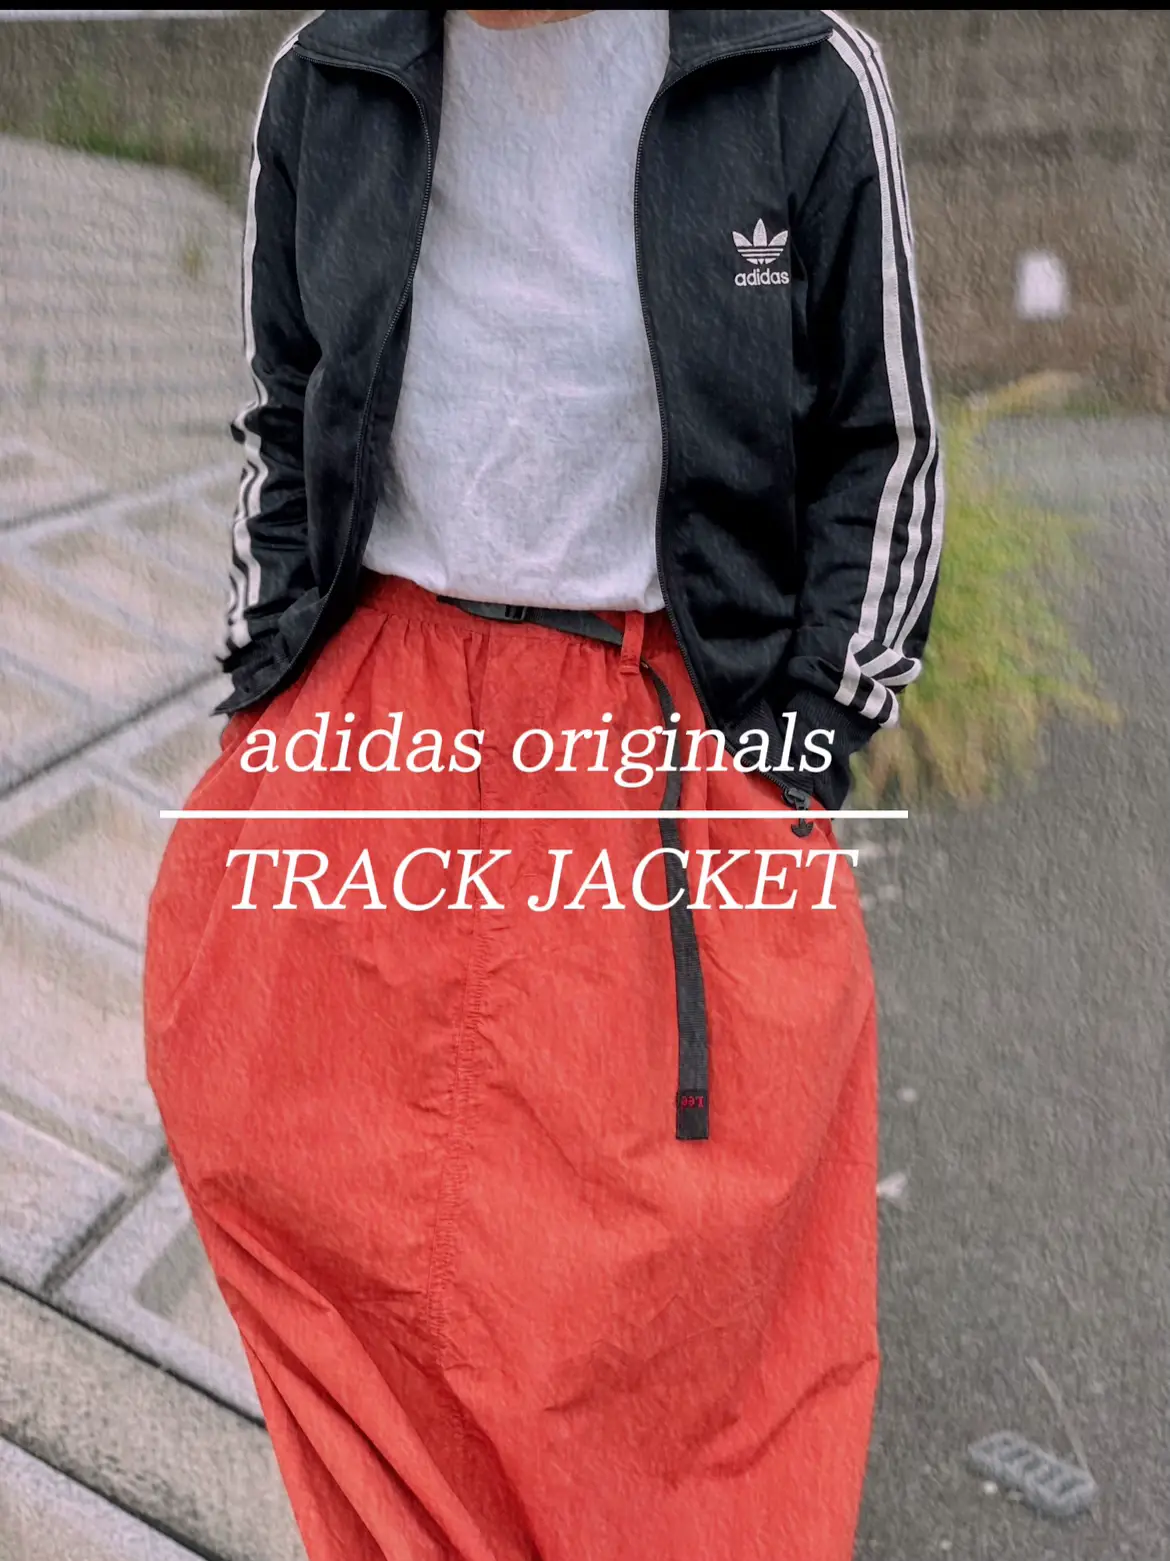 adidas originalsのトラックジャケットでスポーツミックス | Maが投稿